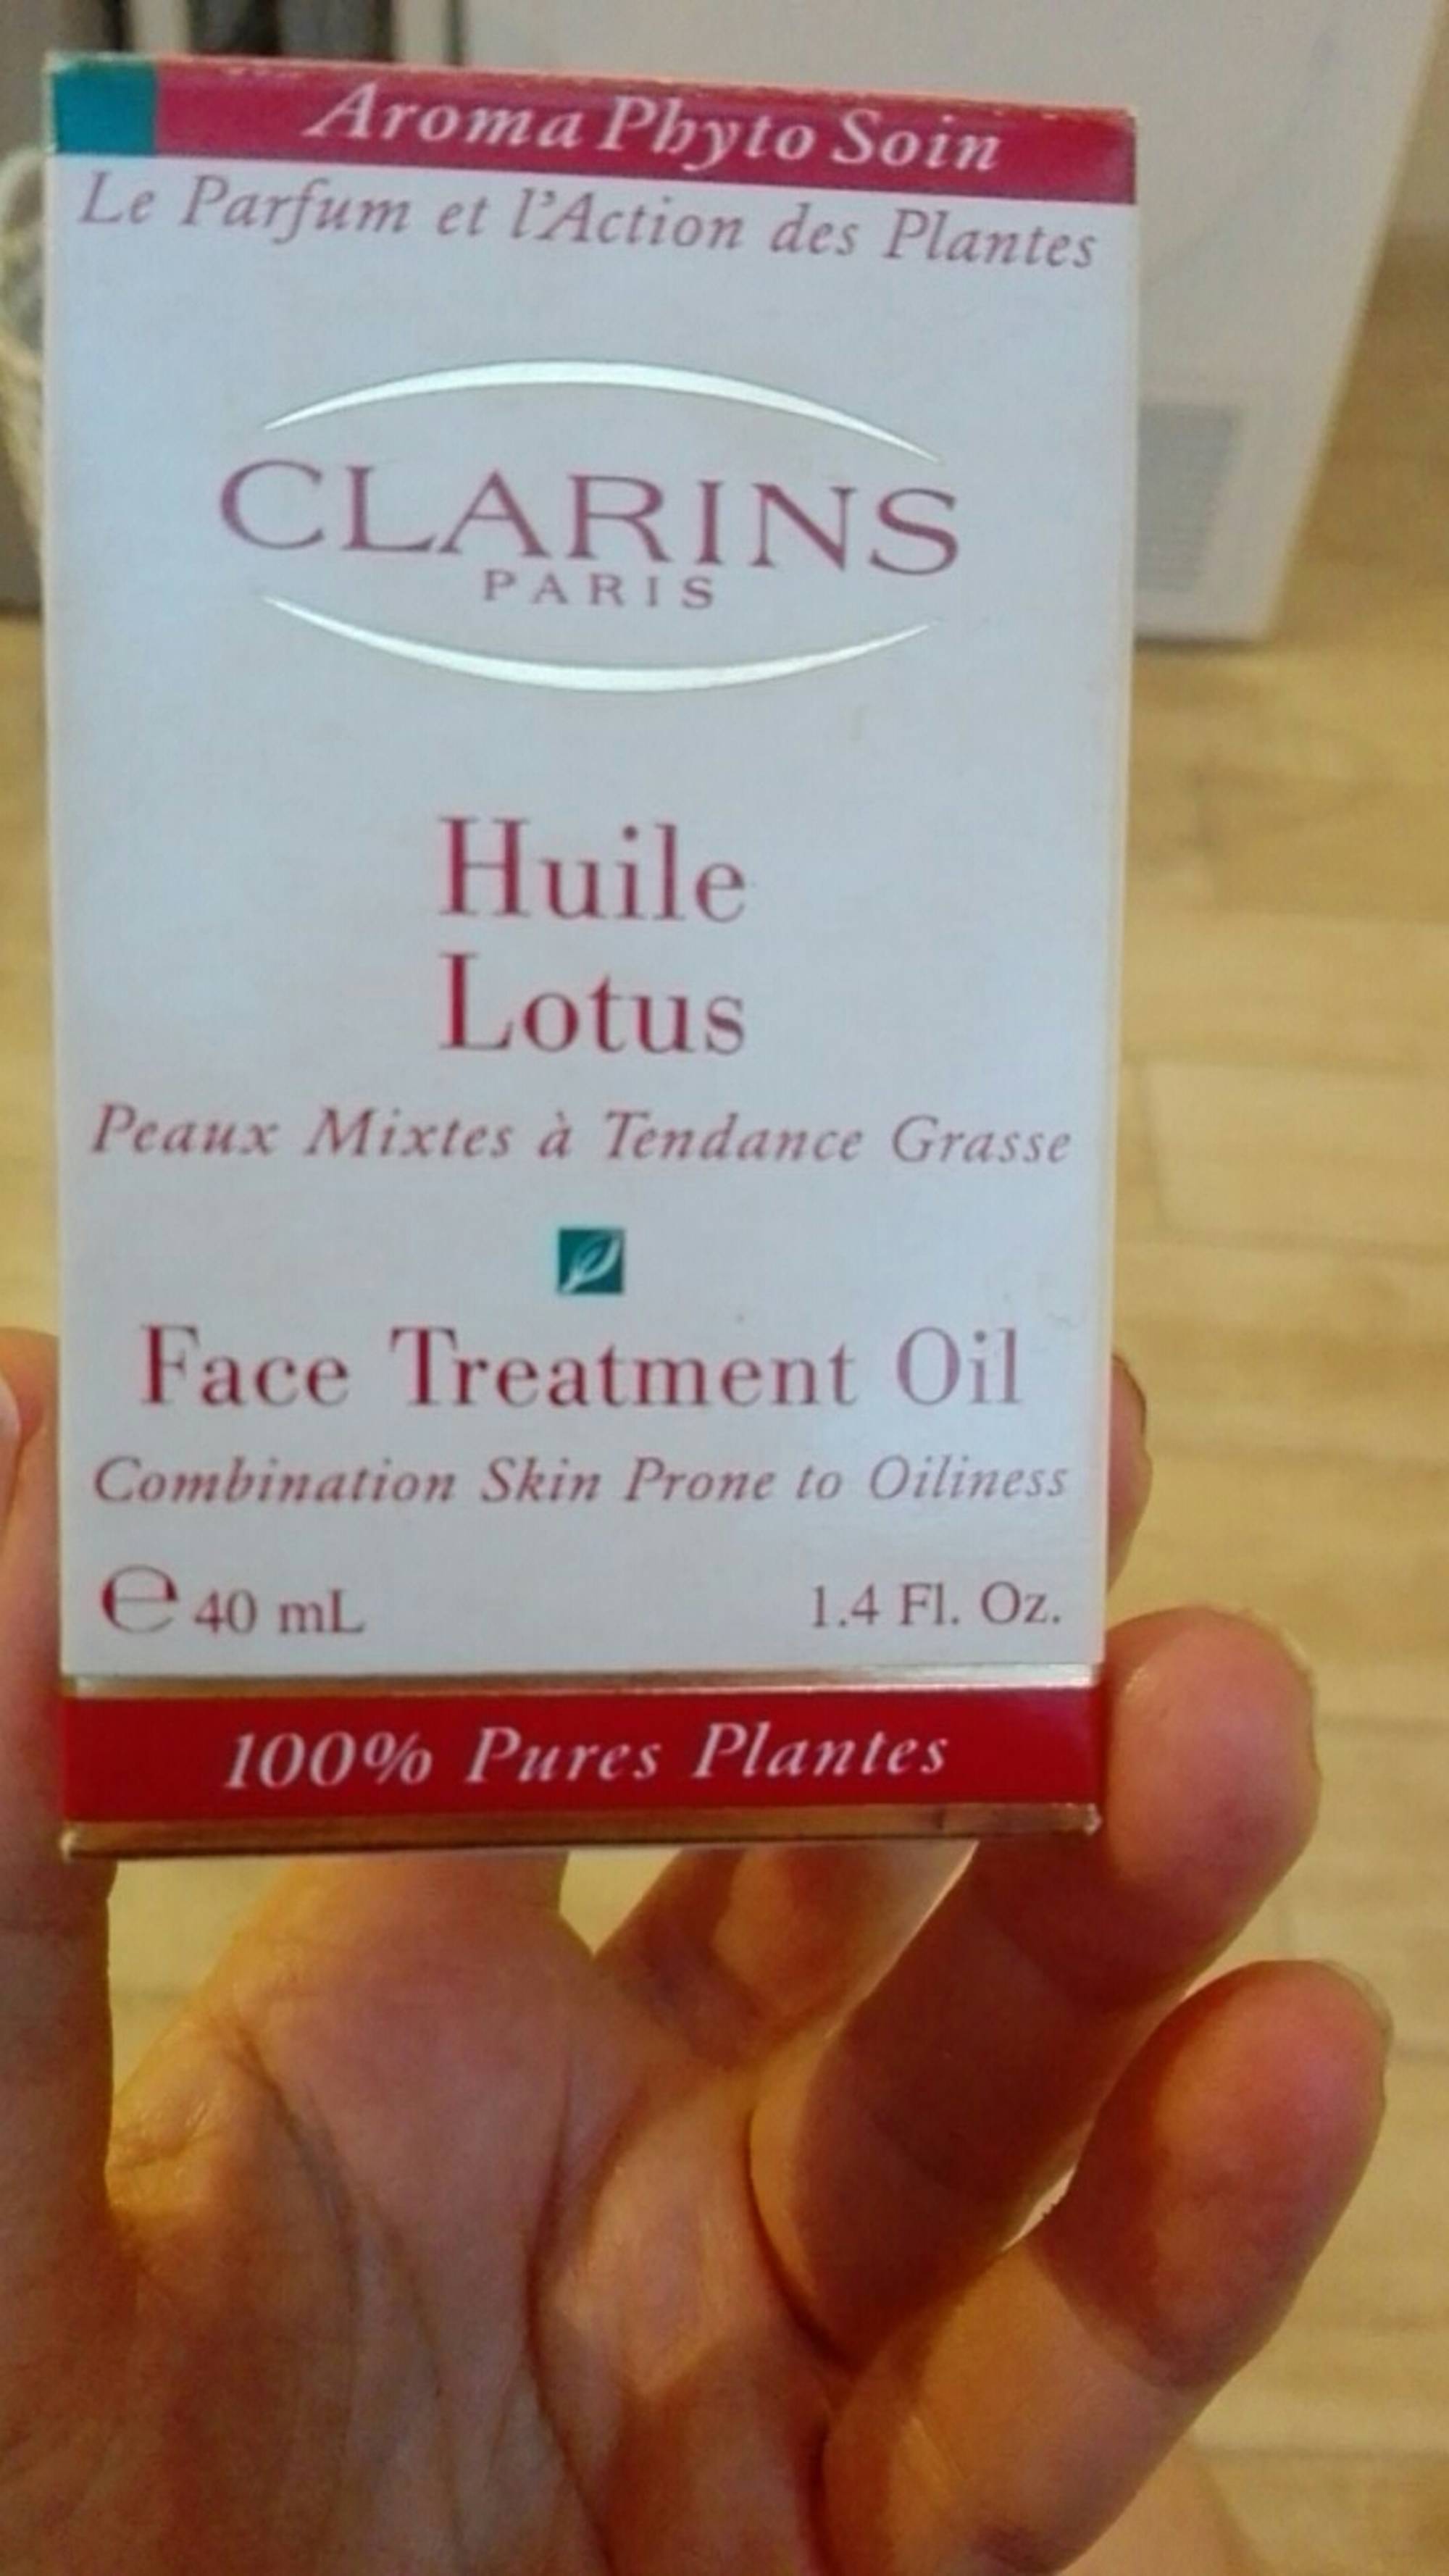 CLARINS - Huile lotus - Face treatment oil